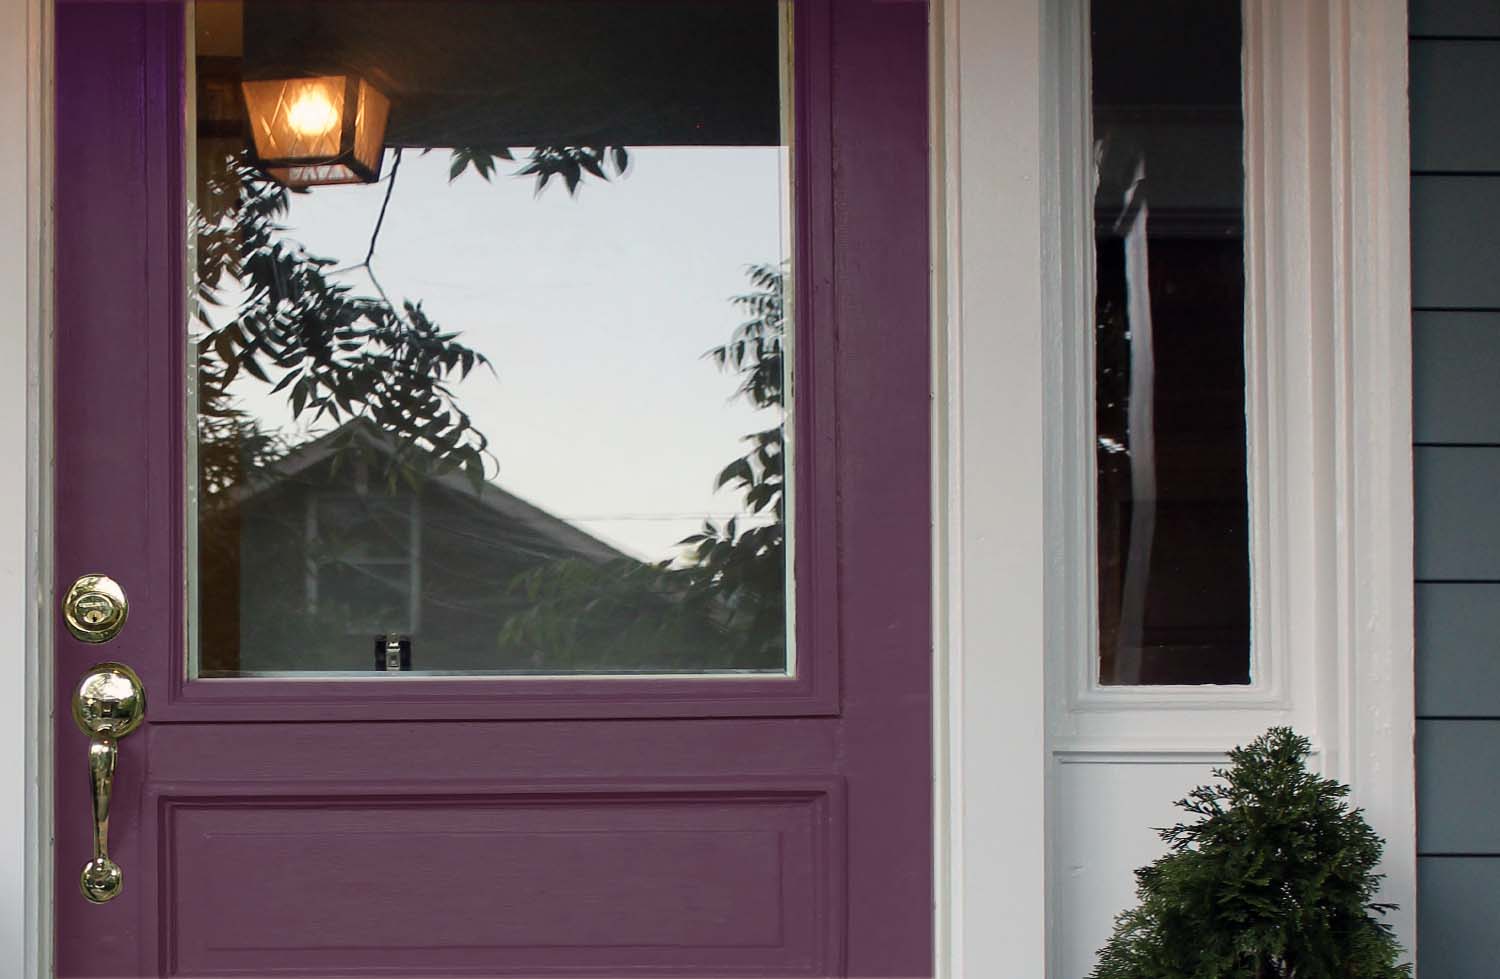 Best Front Door Color For A Gray House Gray House Door Colors